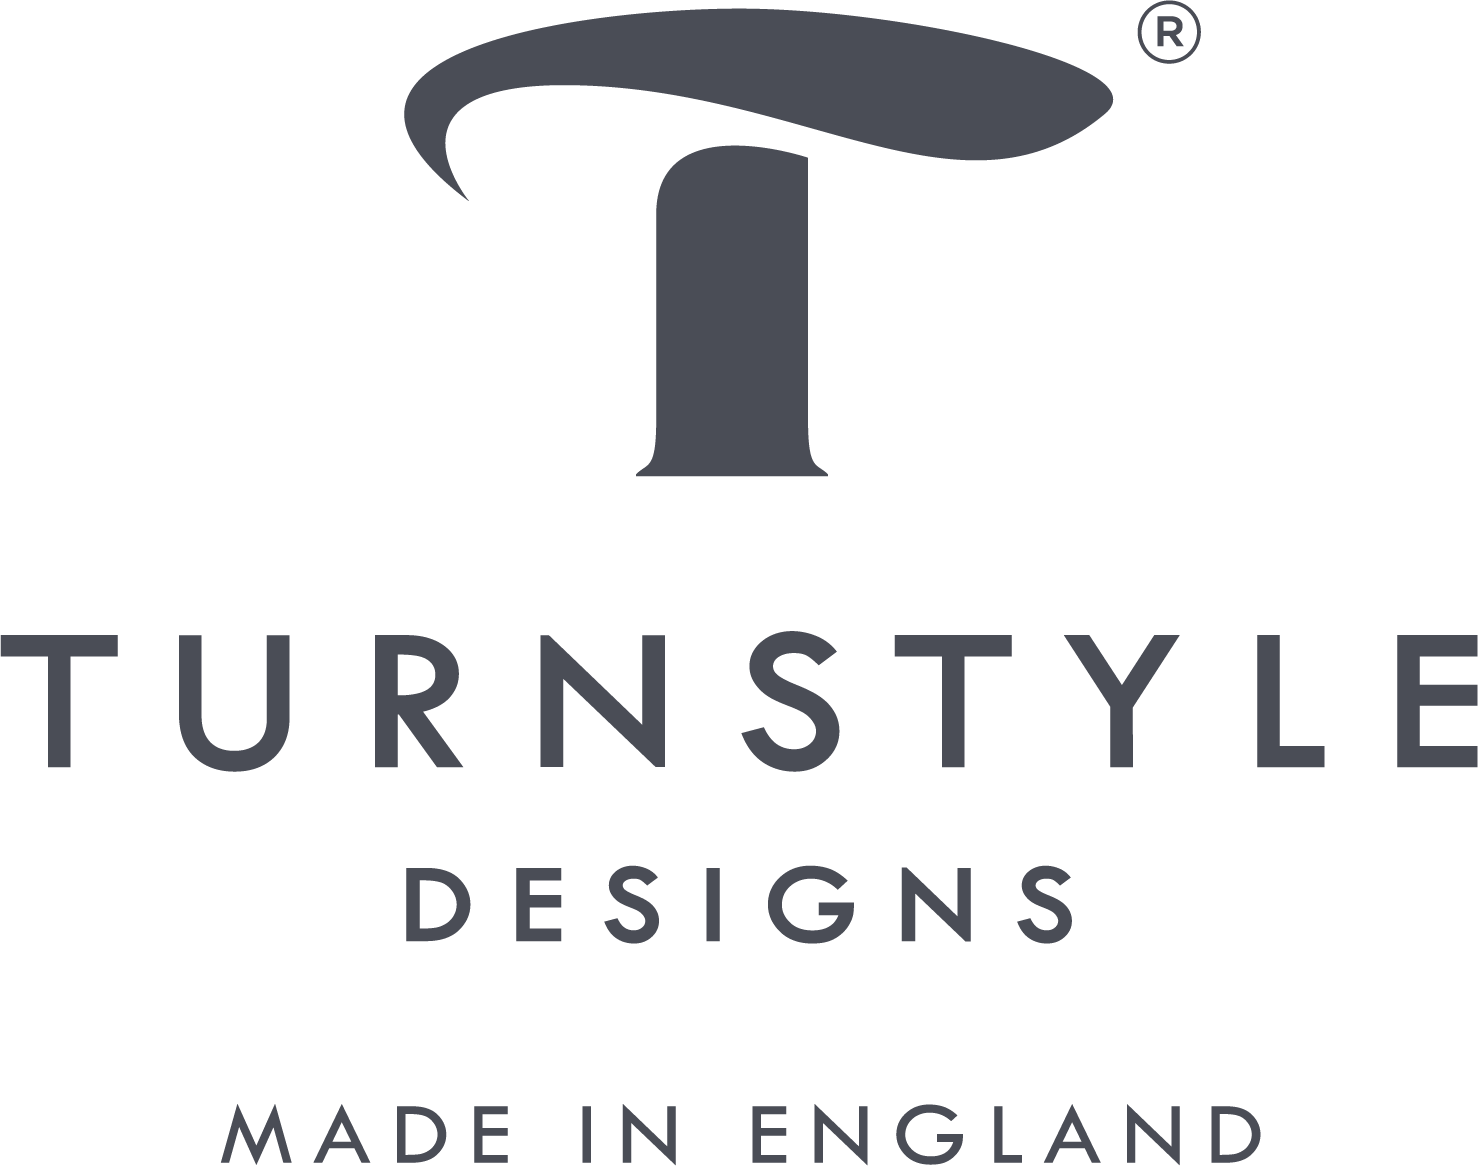 Turnstyle designs logo